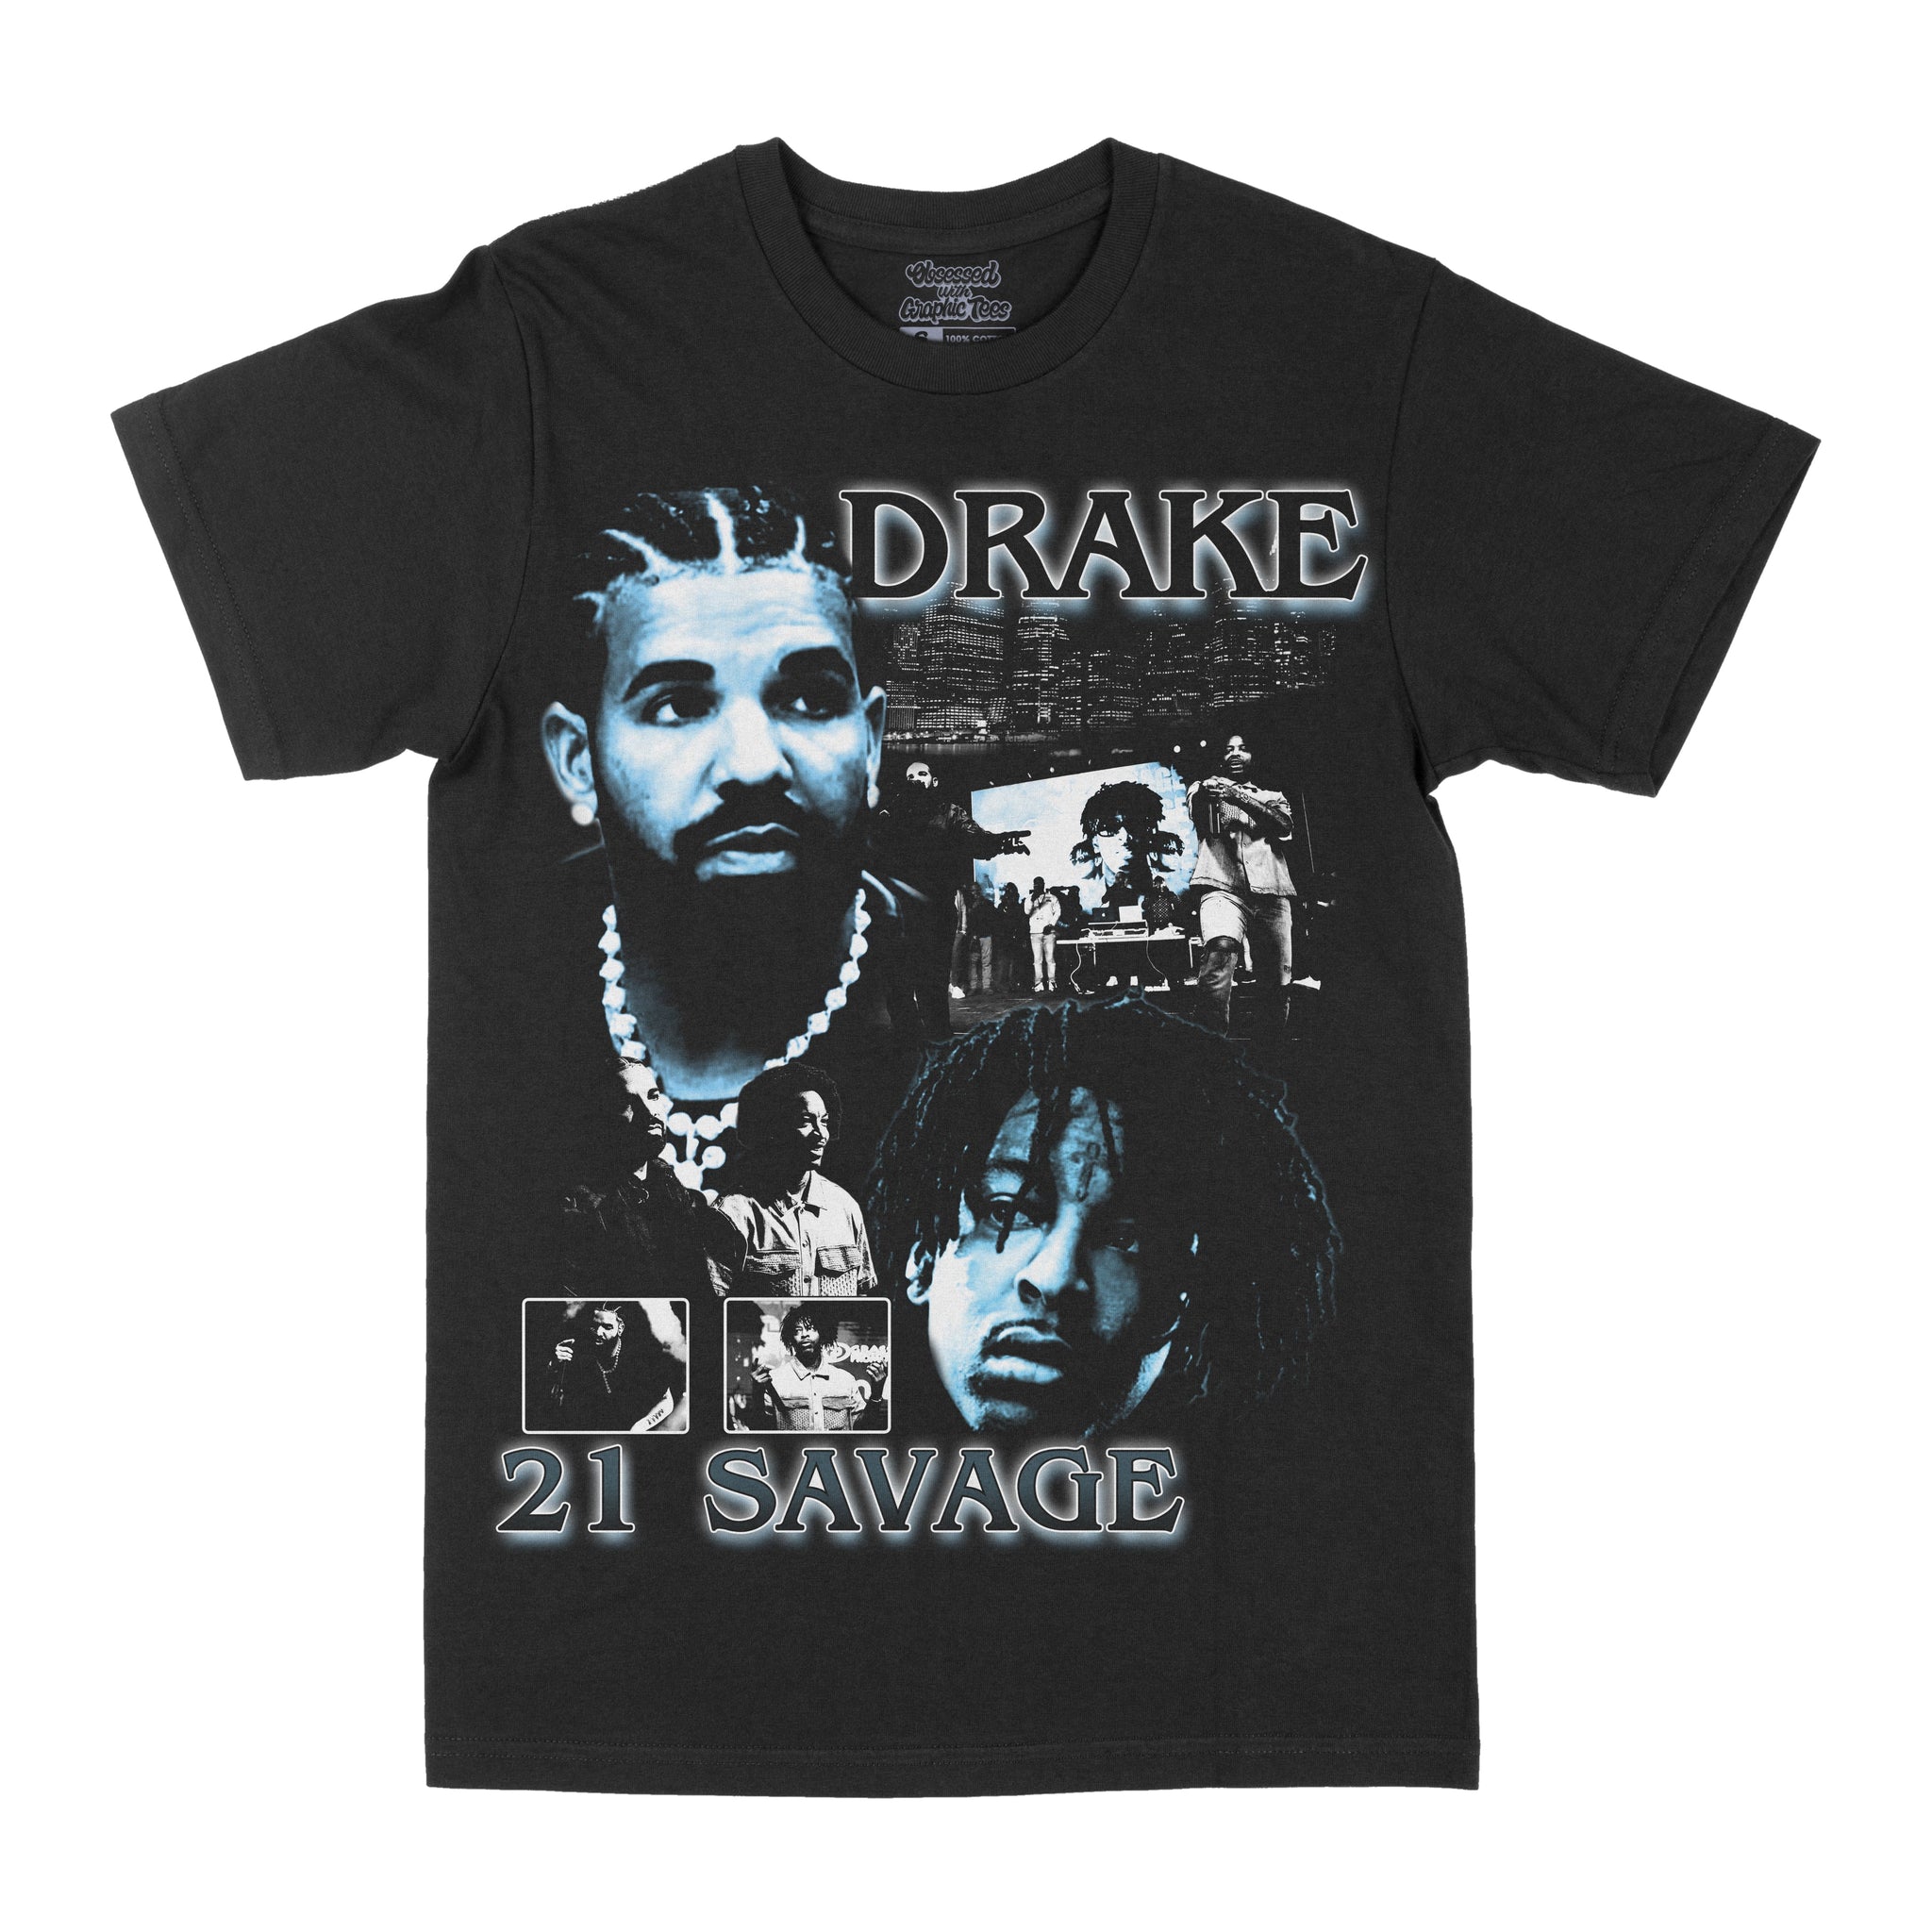 Drake/21 Savage "City Lights"